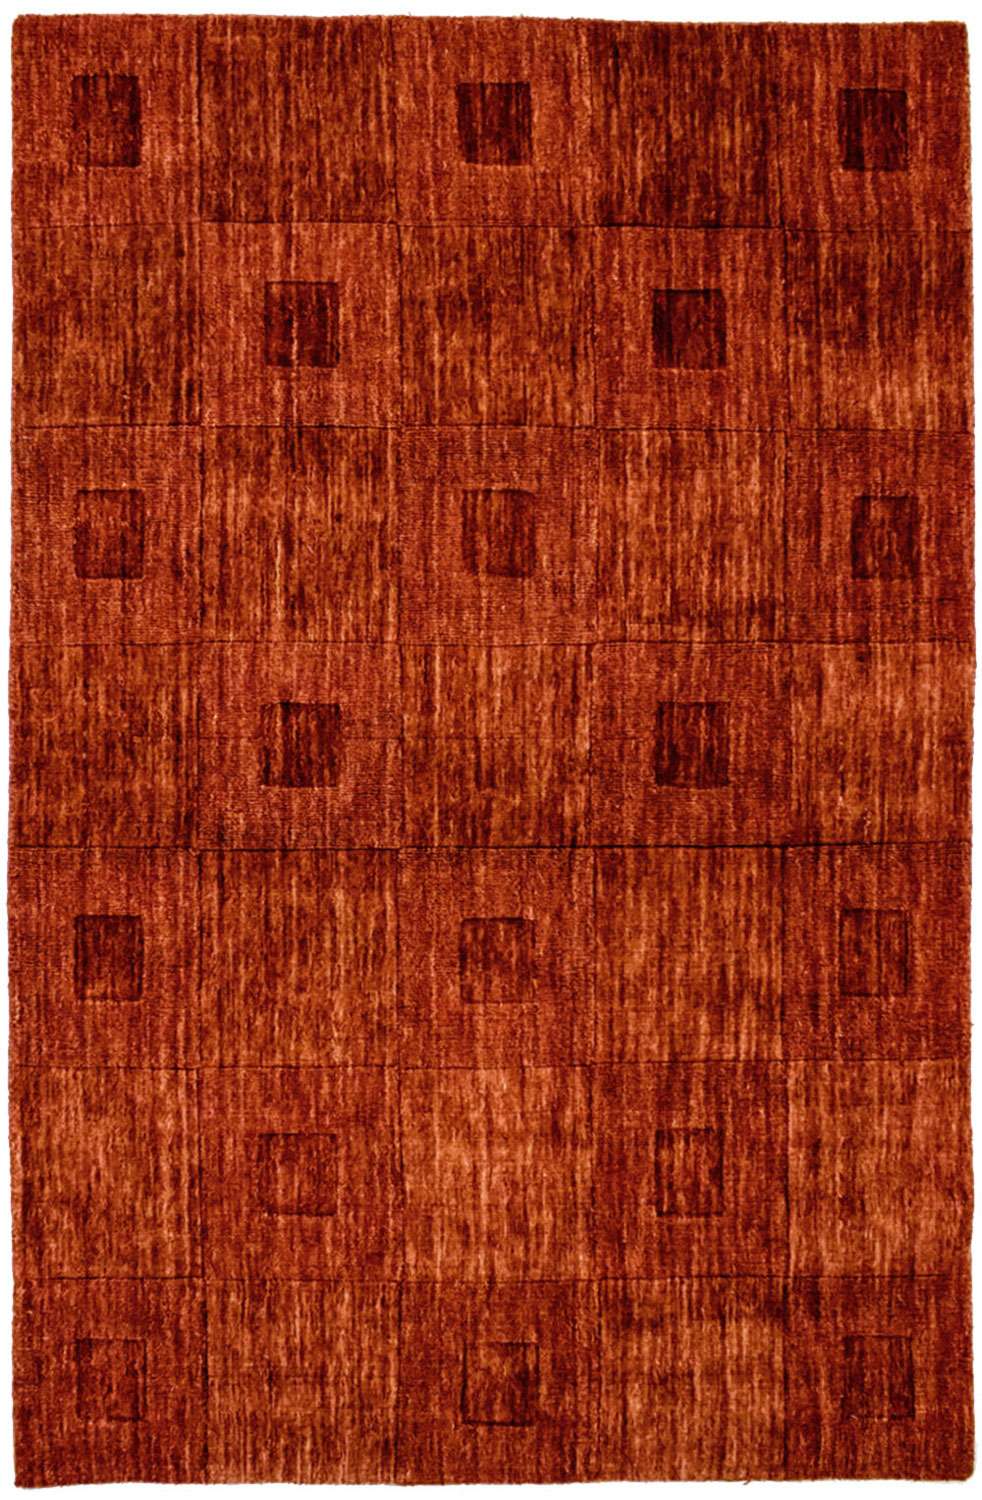 Wool Rug - 177 x 118 cm - multicolored